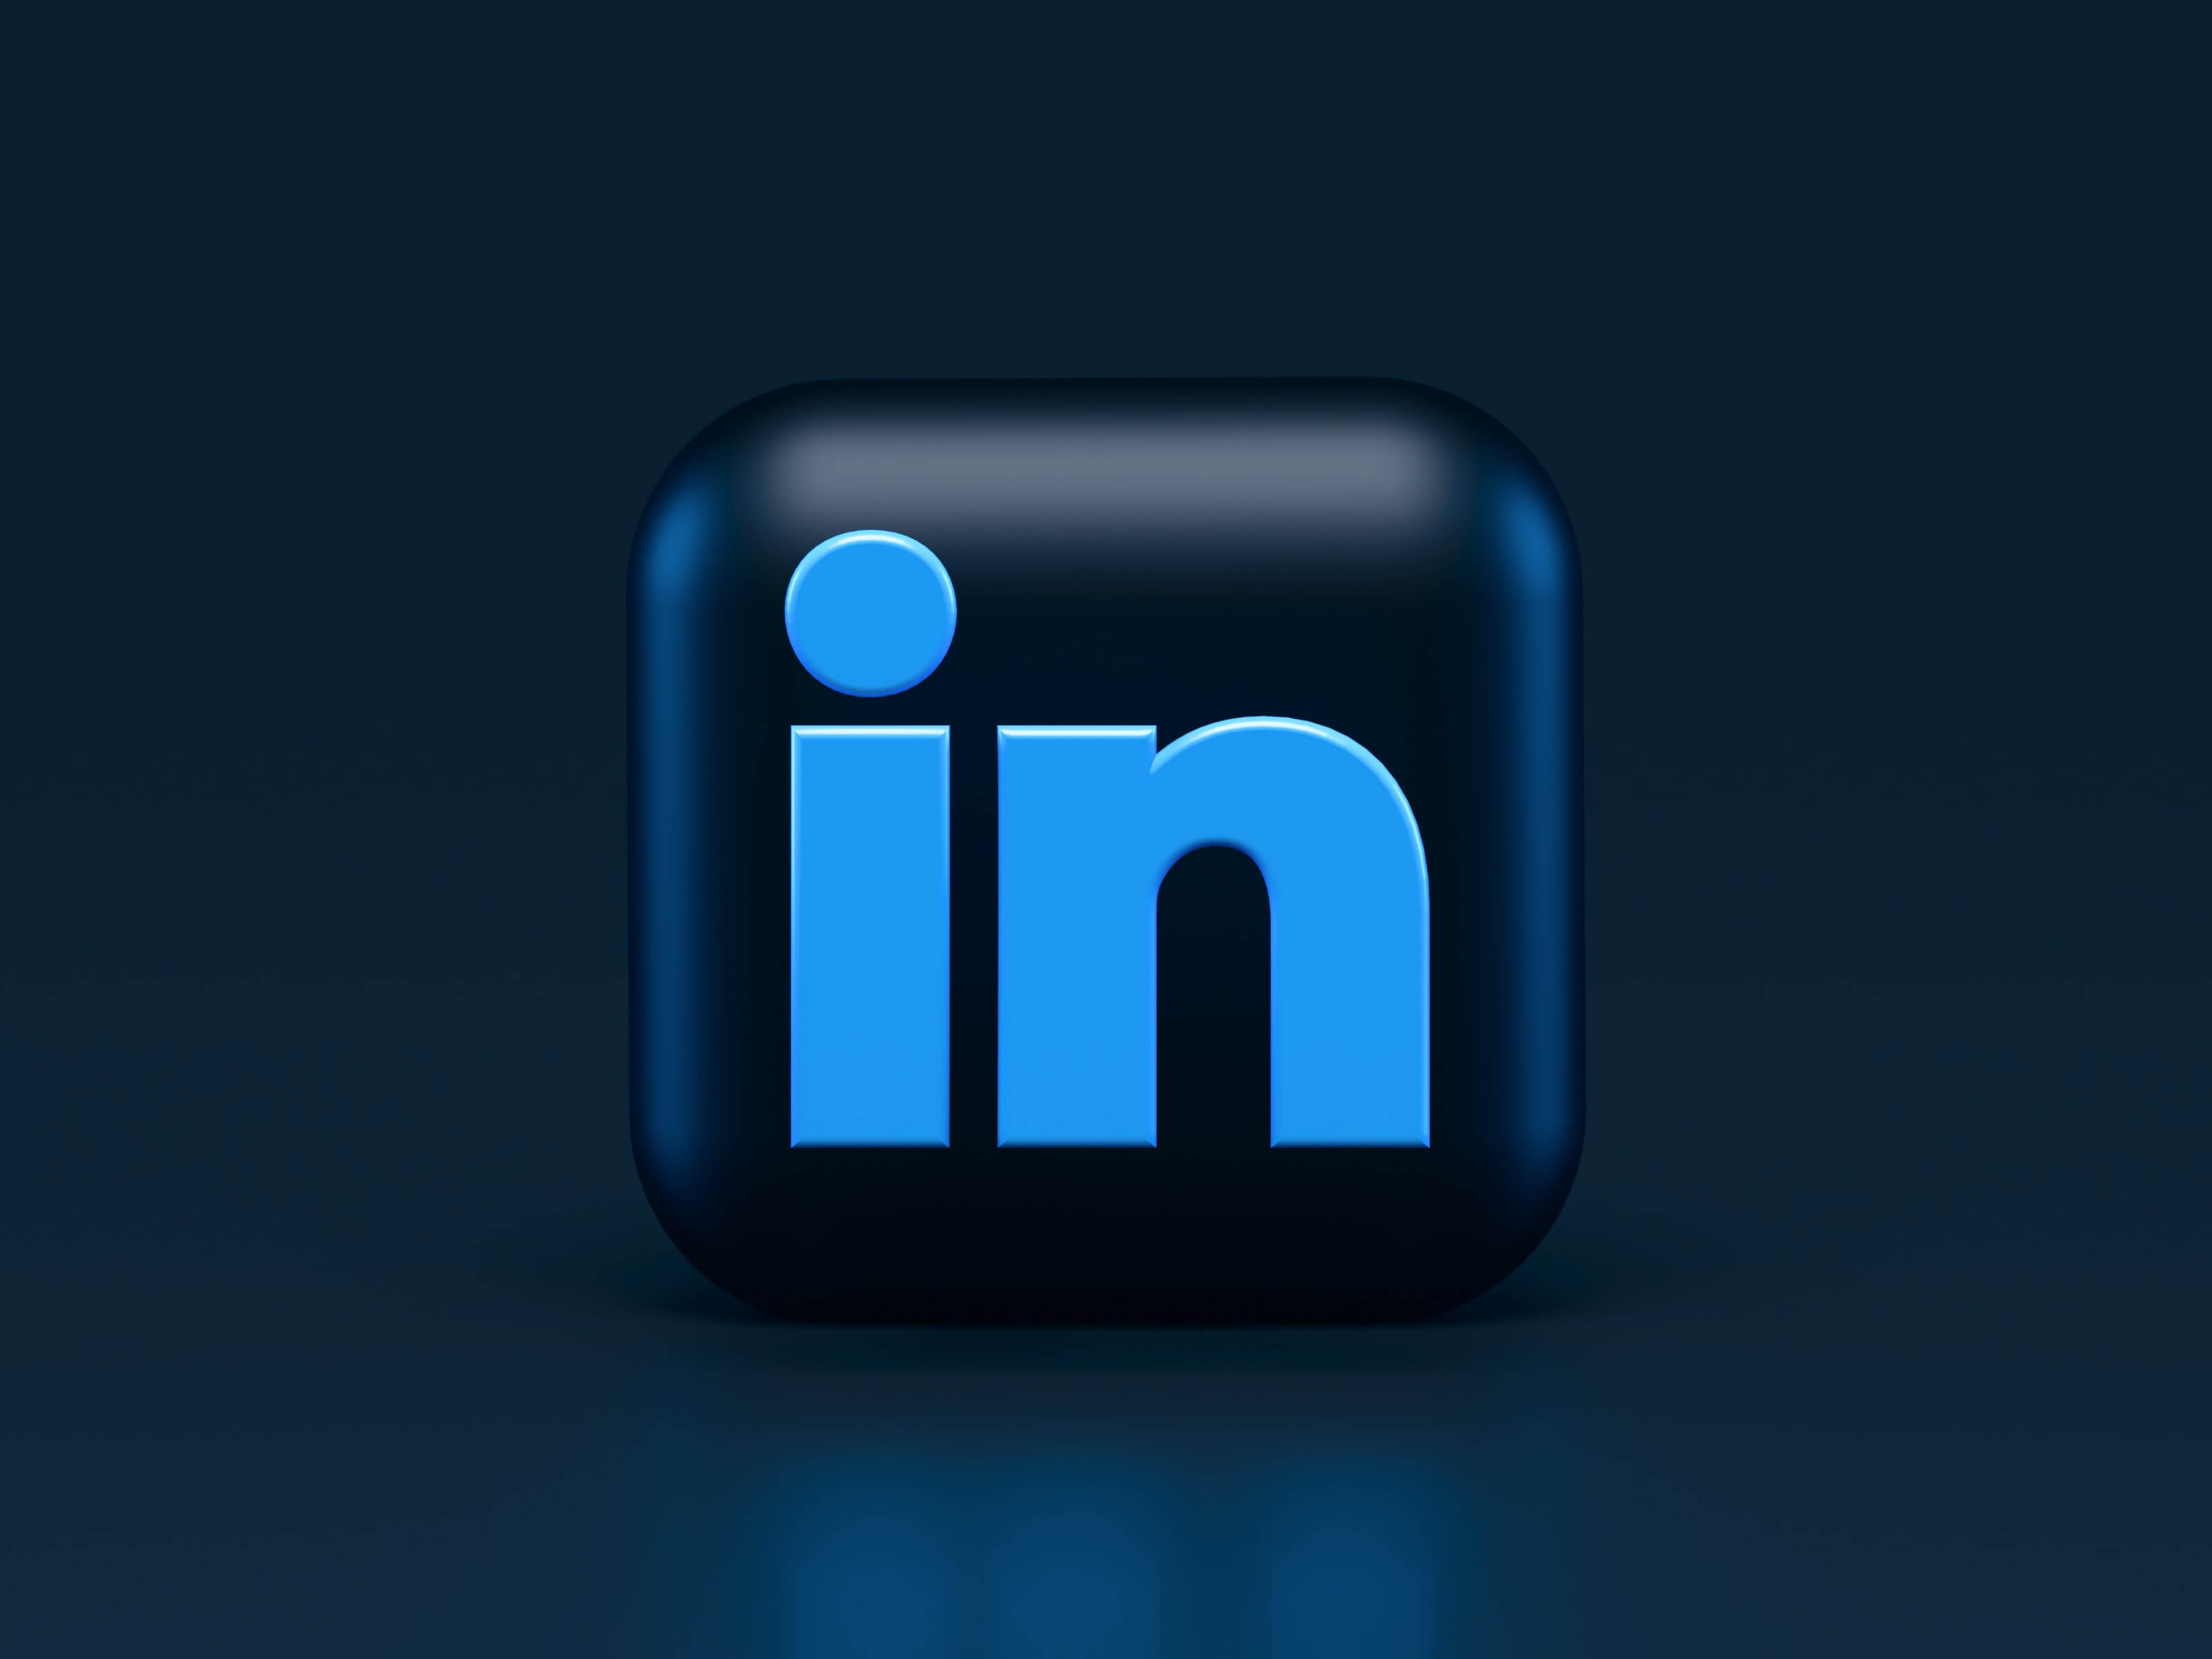 The LinkedIn logo in a bubble icon